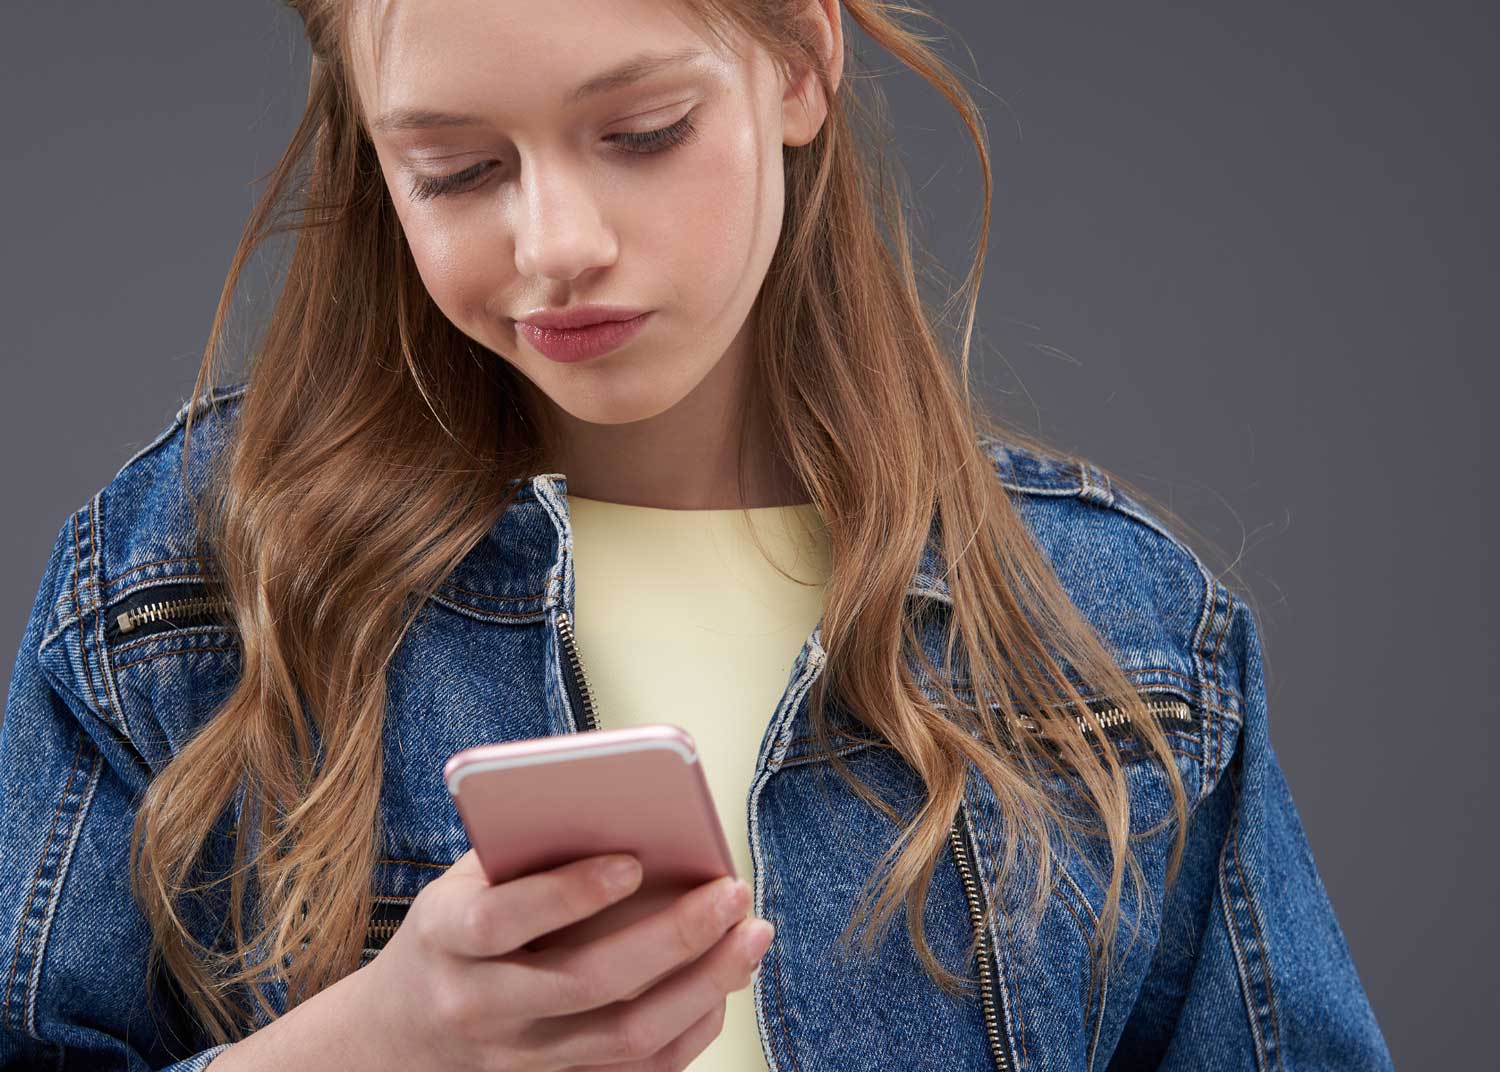 Smartphones, Teens, and ADHD